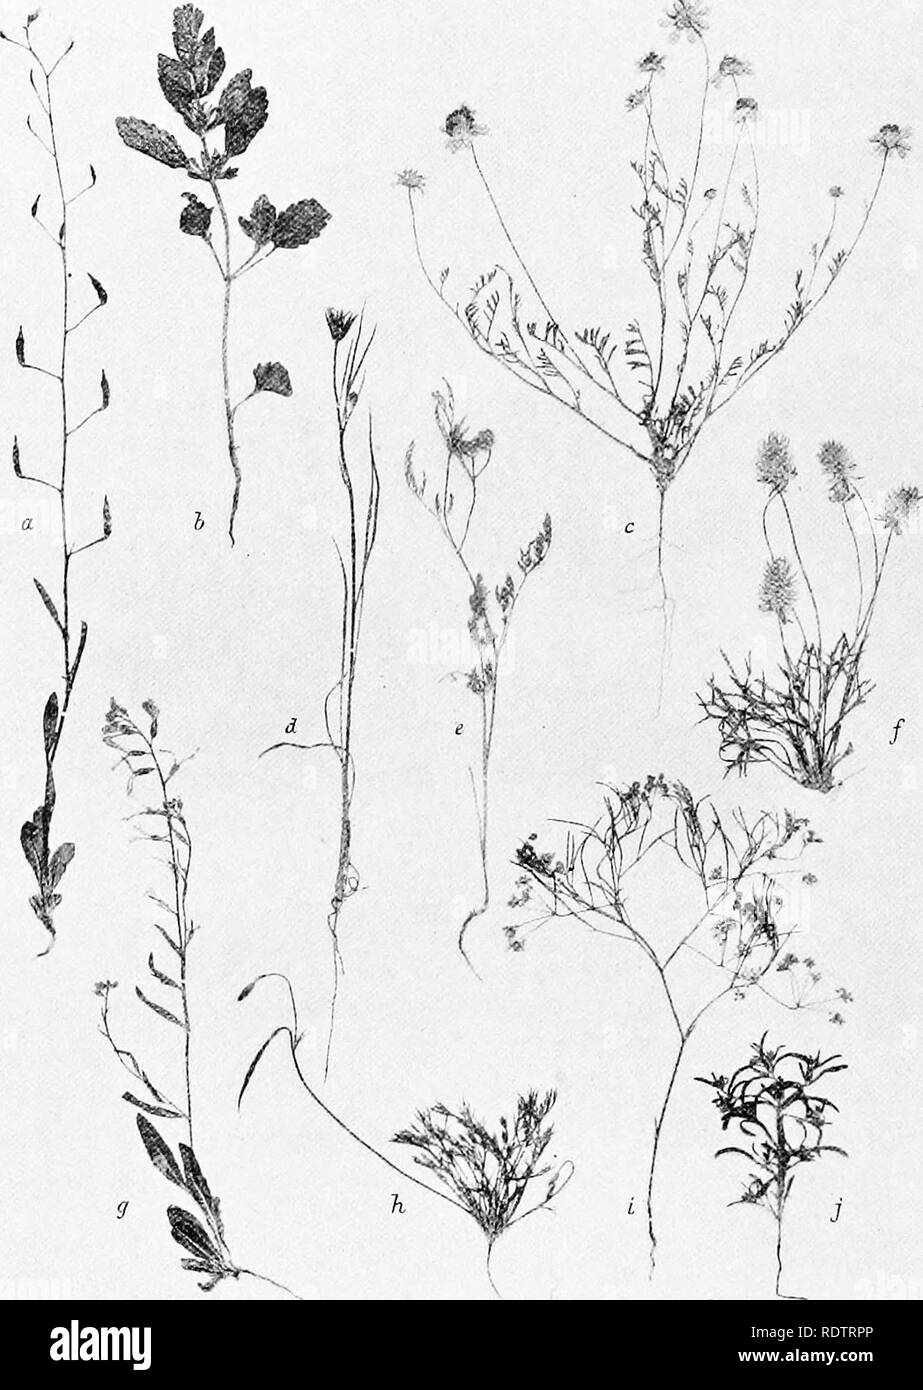 . Studies on the vegetation of the Transcaspian lowlands. Botany. — 62 — linearifolia, Aspenigo procumbens, Lappula-species, Heliotropium europaeum, Onosma hispidum, Nonnea picta), Umbelliferae [Aphanoplema capillifolia, Carum confusum and turkestanicum,. Fig. 5. Representative eptiemeral plants from Clay-desert: a, Goldbachia laevigata, b, Lallemantia Royleana: c, Matricaria lamellata. d, Koelpinia linearis, e, Caucalis leptophylla. f, Ceratocephalus orthoceras. g, Malcolmia Bungei. h, Hgpecoum pendulum, i, Acanthopleura capillifolia. j, Lappula spinocarpos.. Please note that these images are Stock Photo